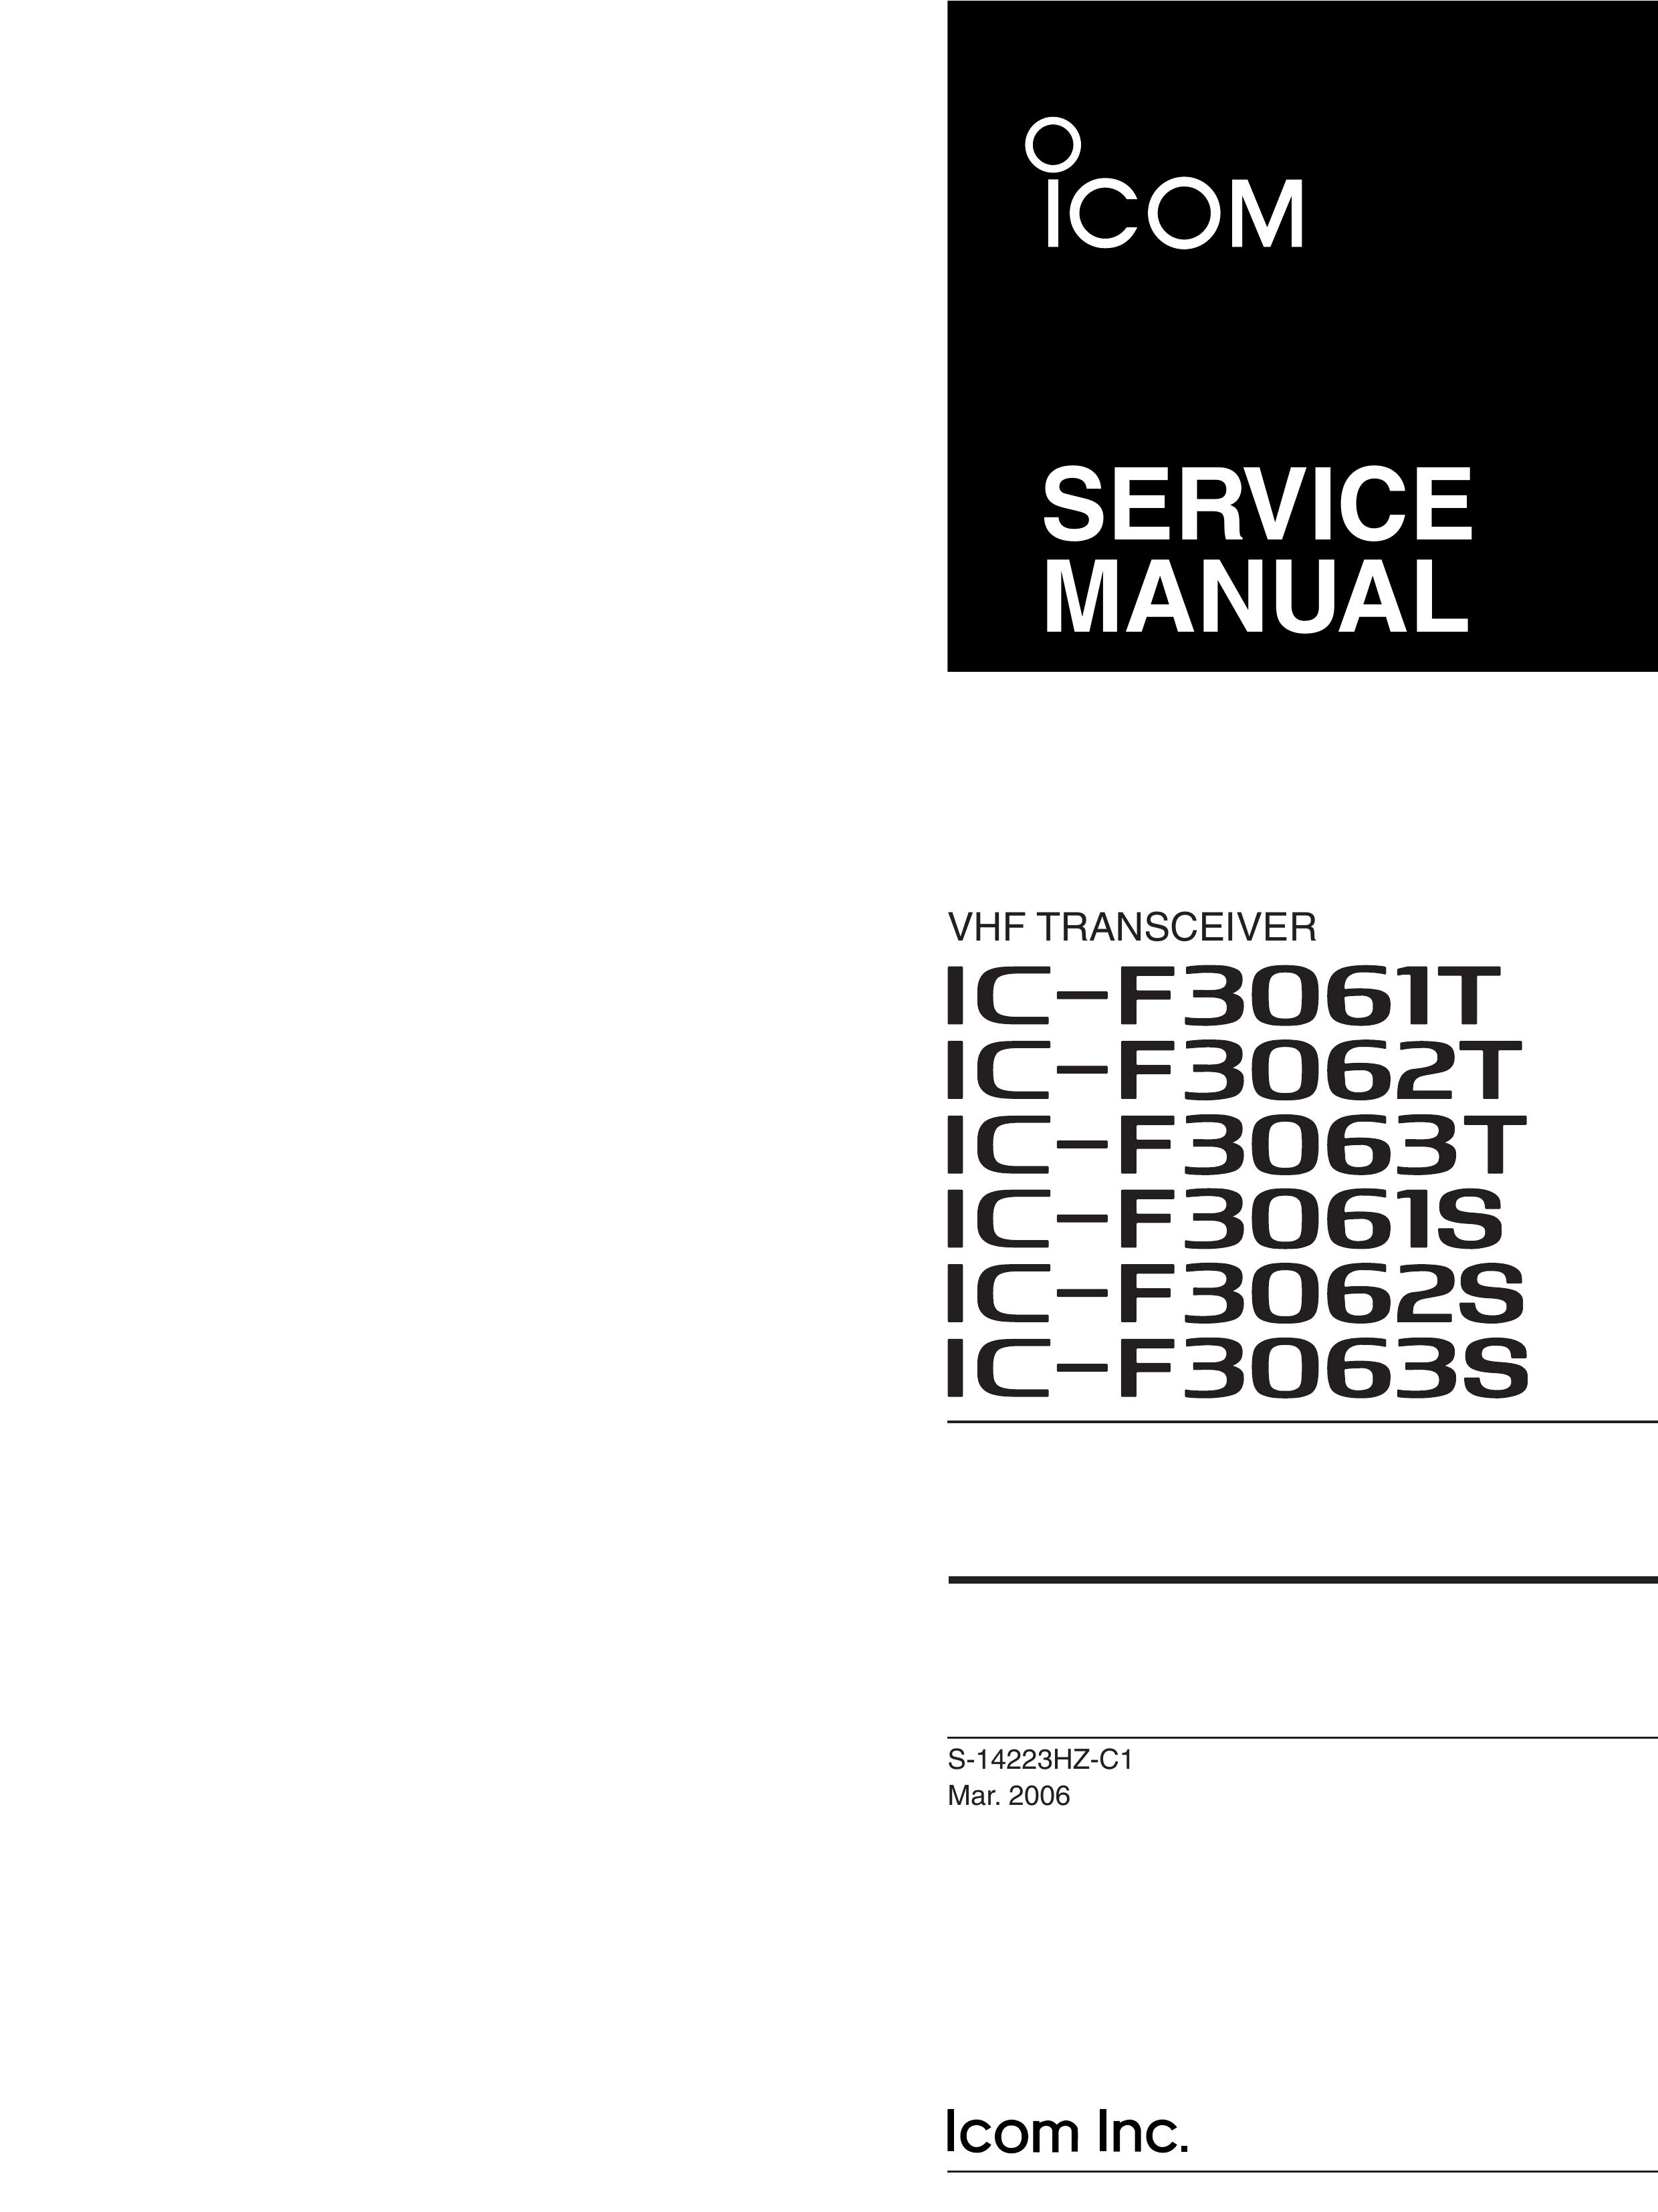 Icom IC-F3063T Marine Radio User Manual